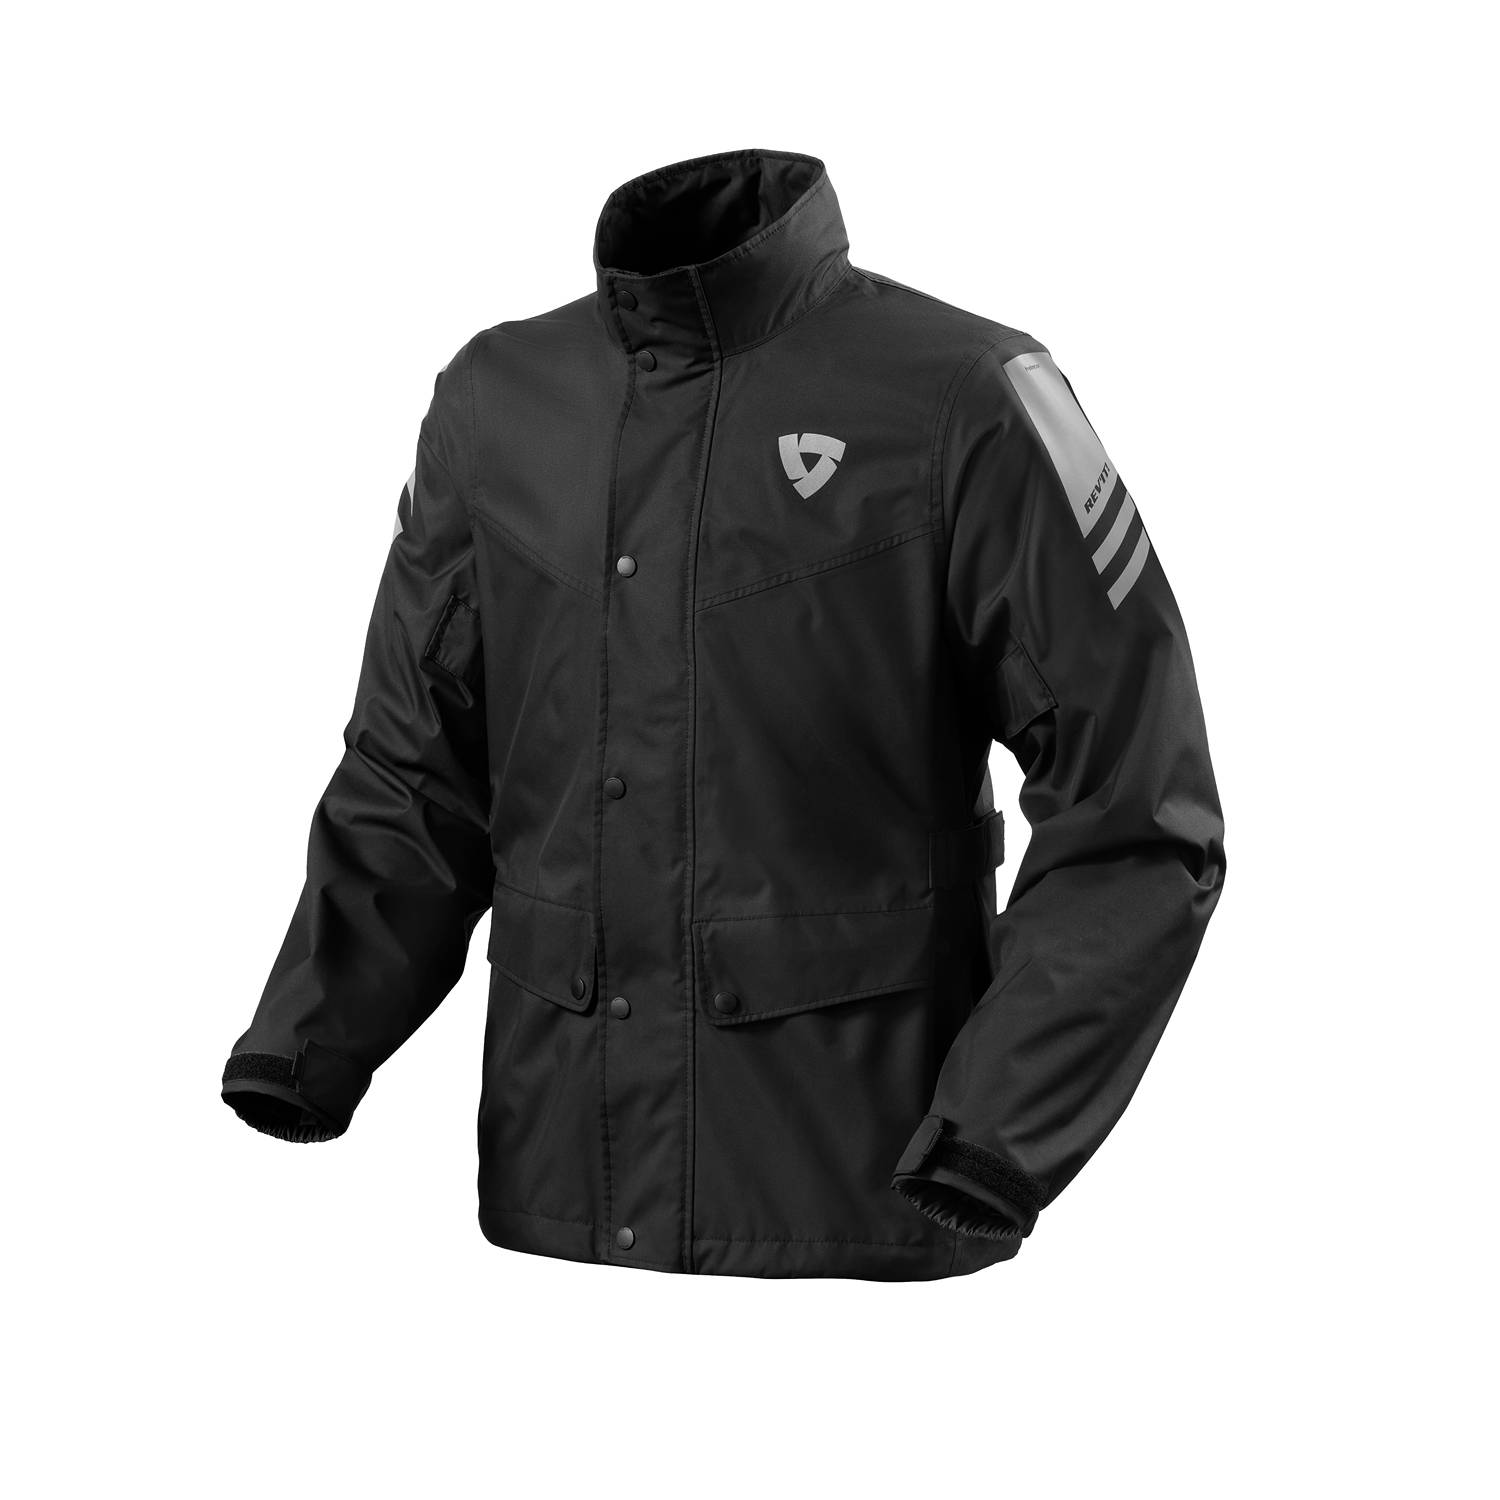 Image of REV'IT! Nitric 4 H2O Rain Jacket Black Size XL ID 8700001371612